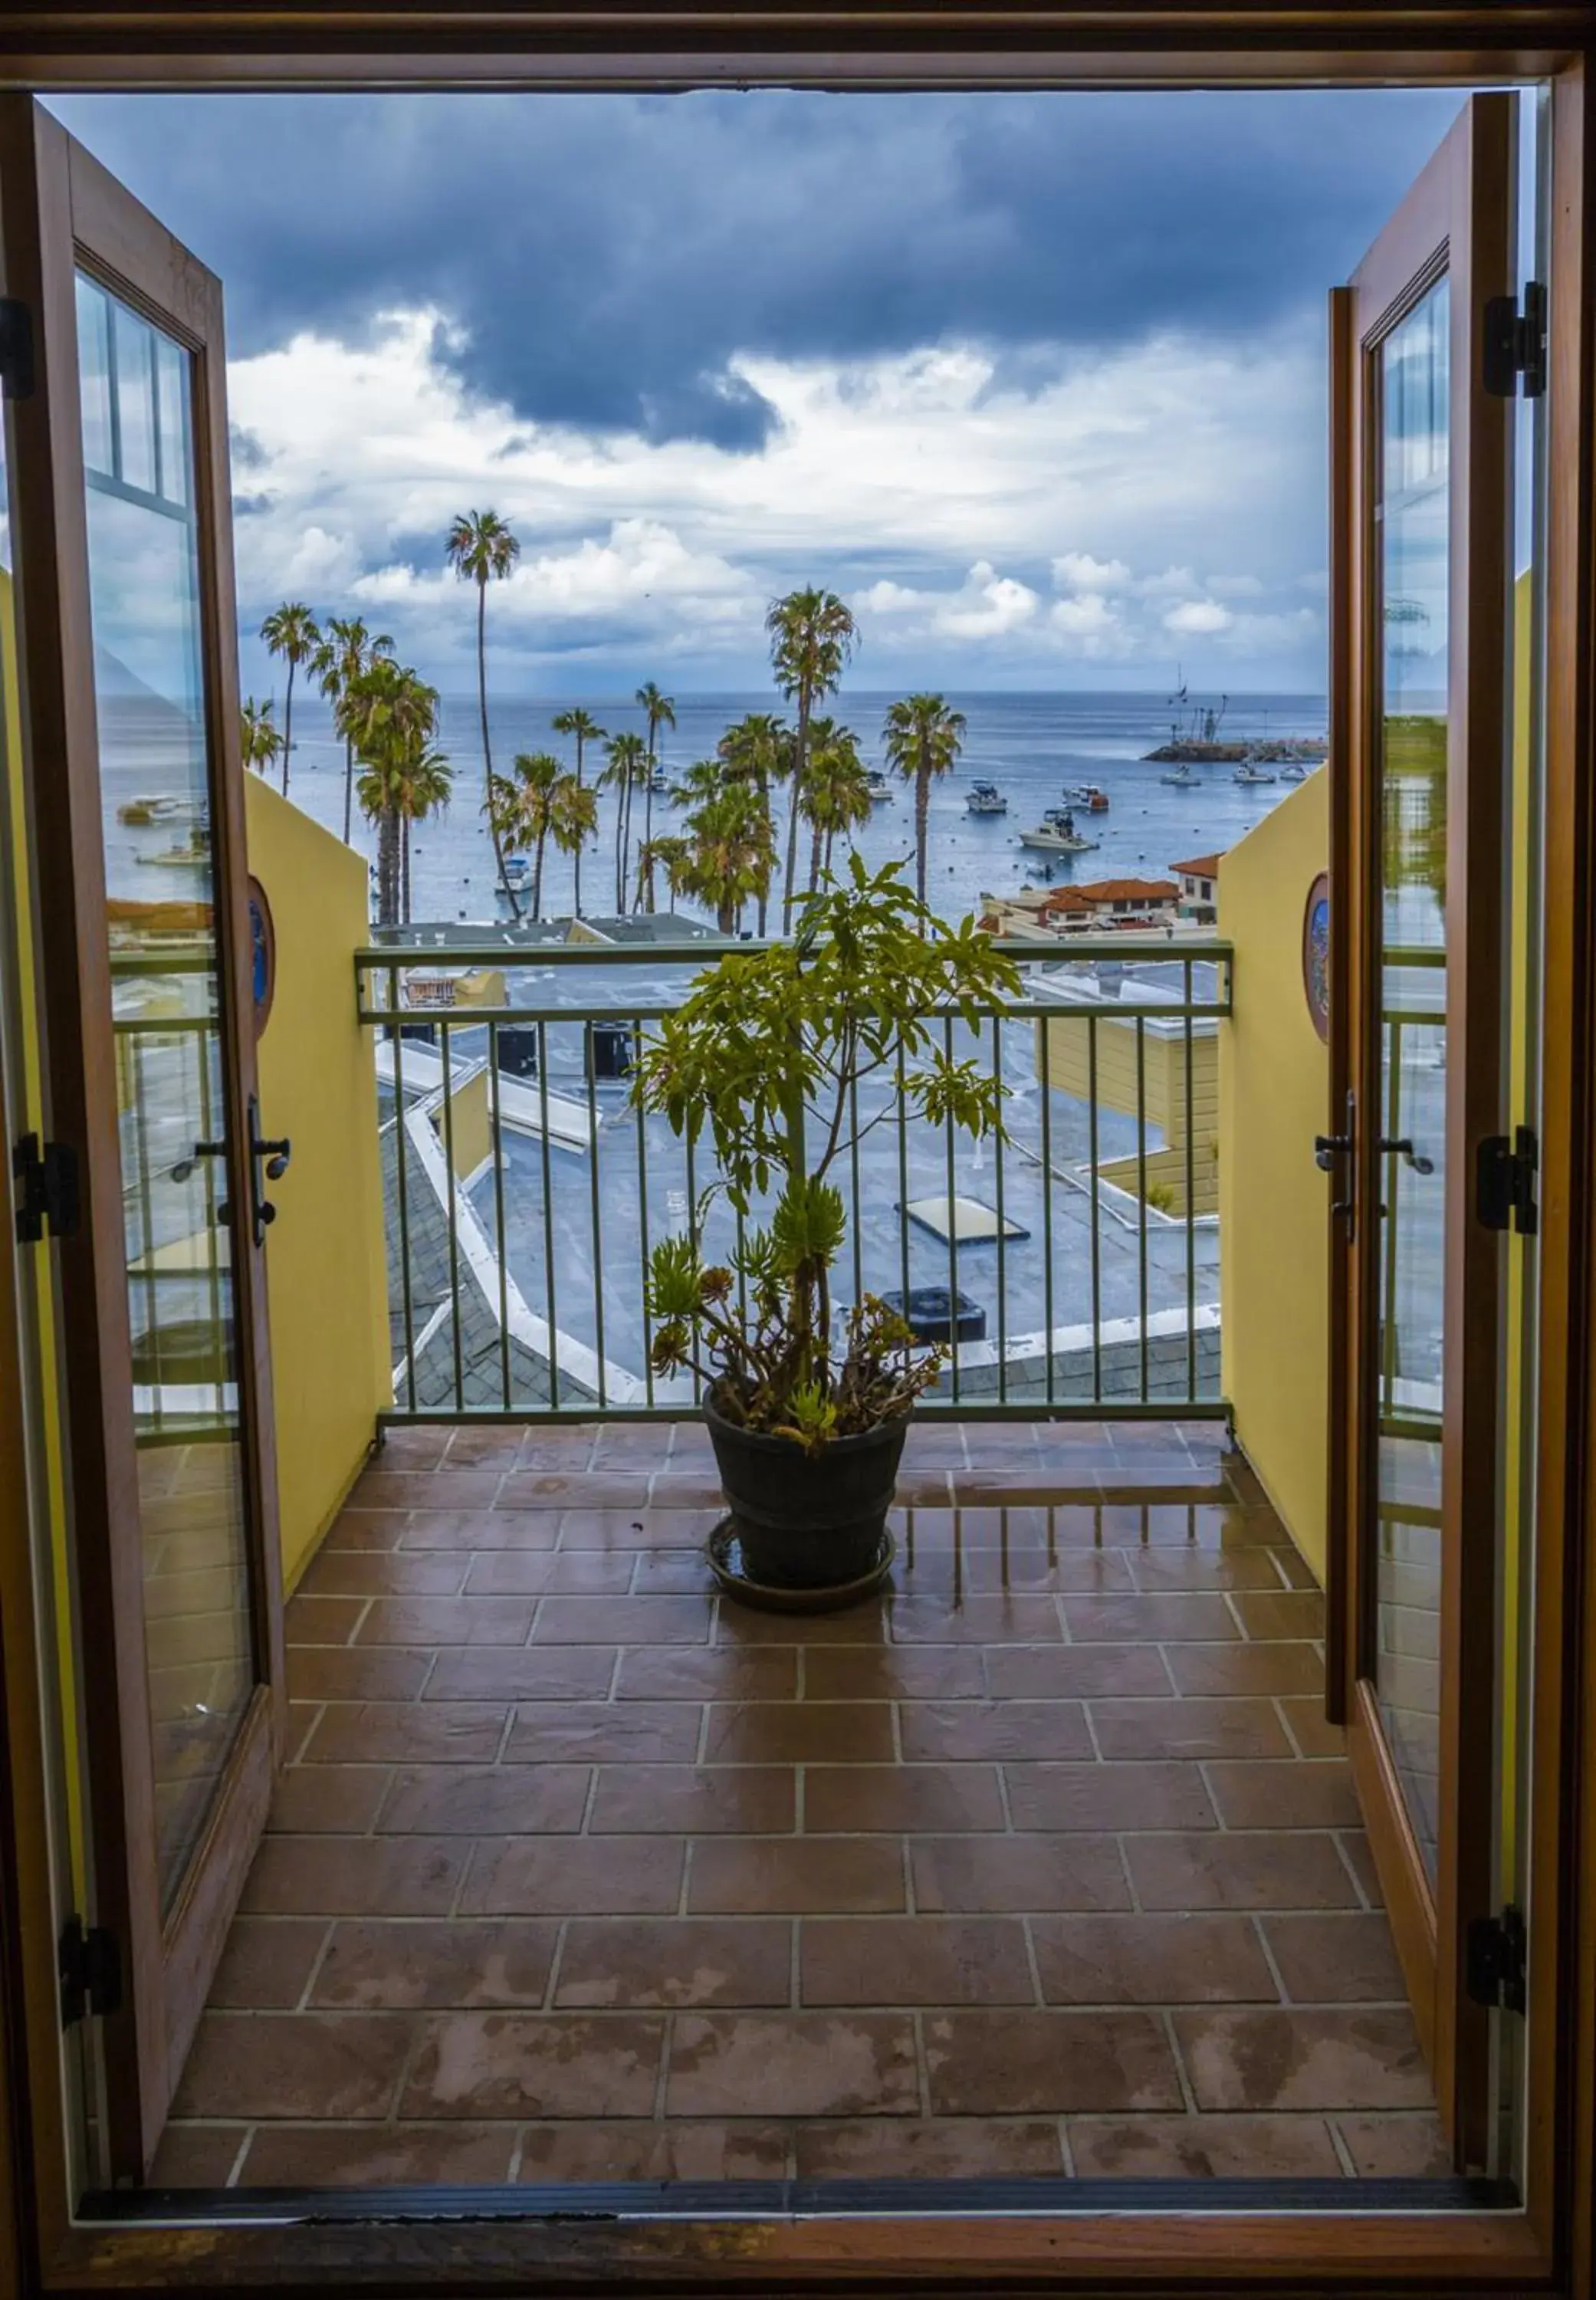 Decorative detail, Balcony/Terrace in The Avalon Hotel in Catalina Island